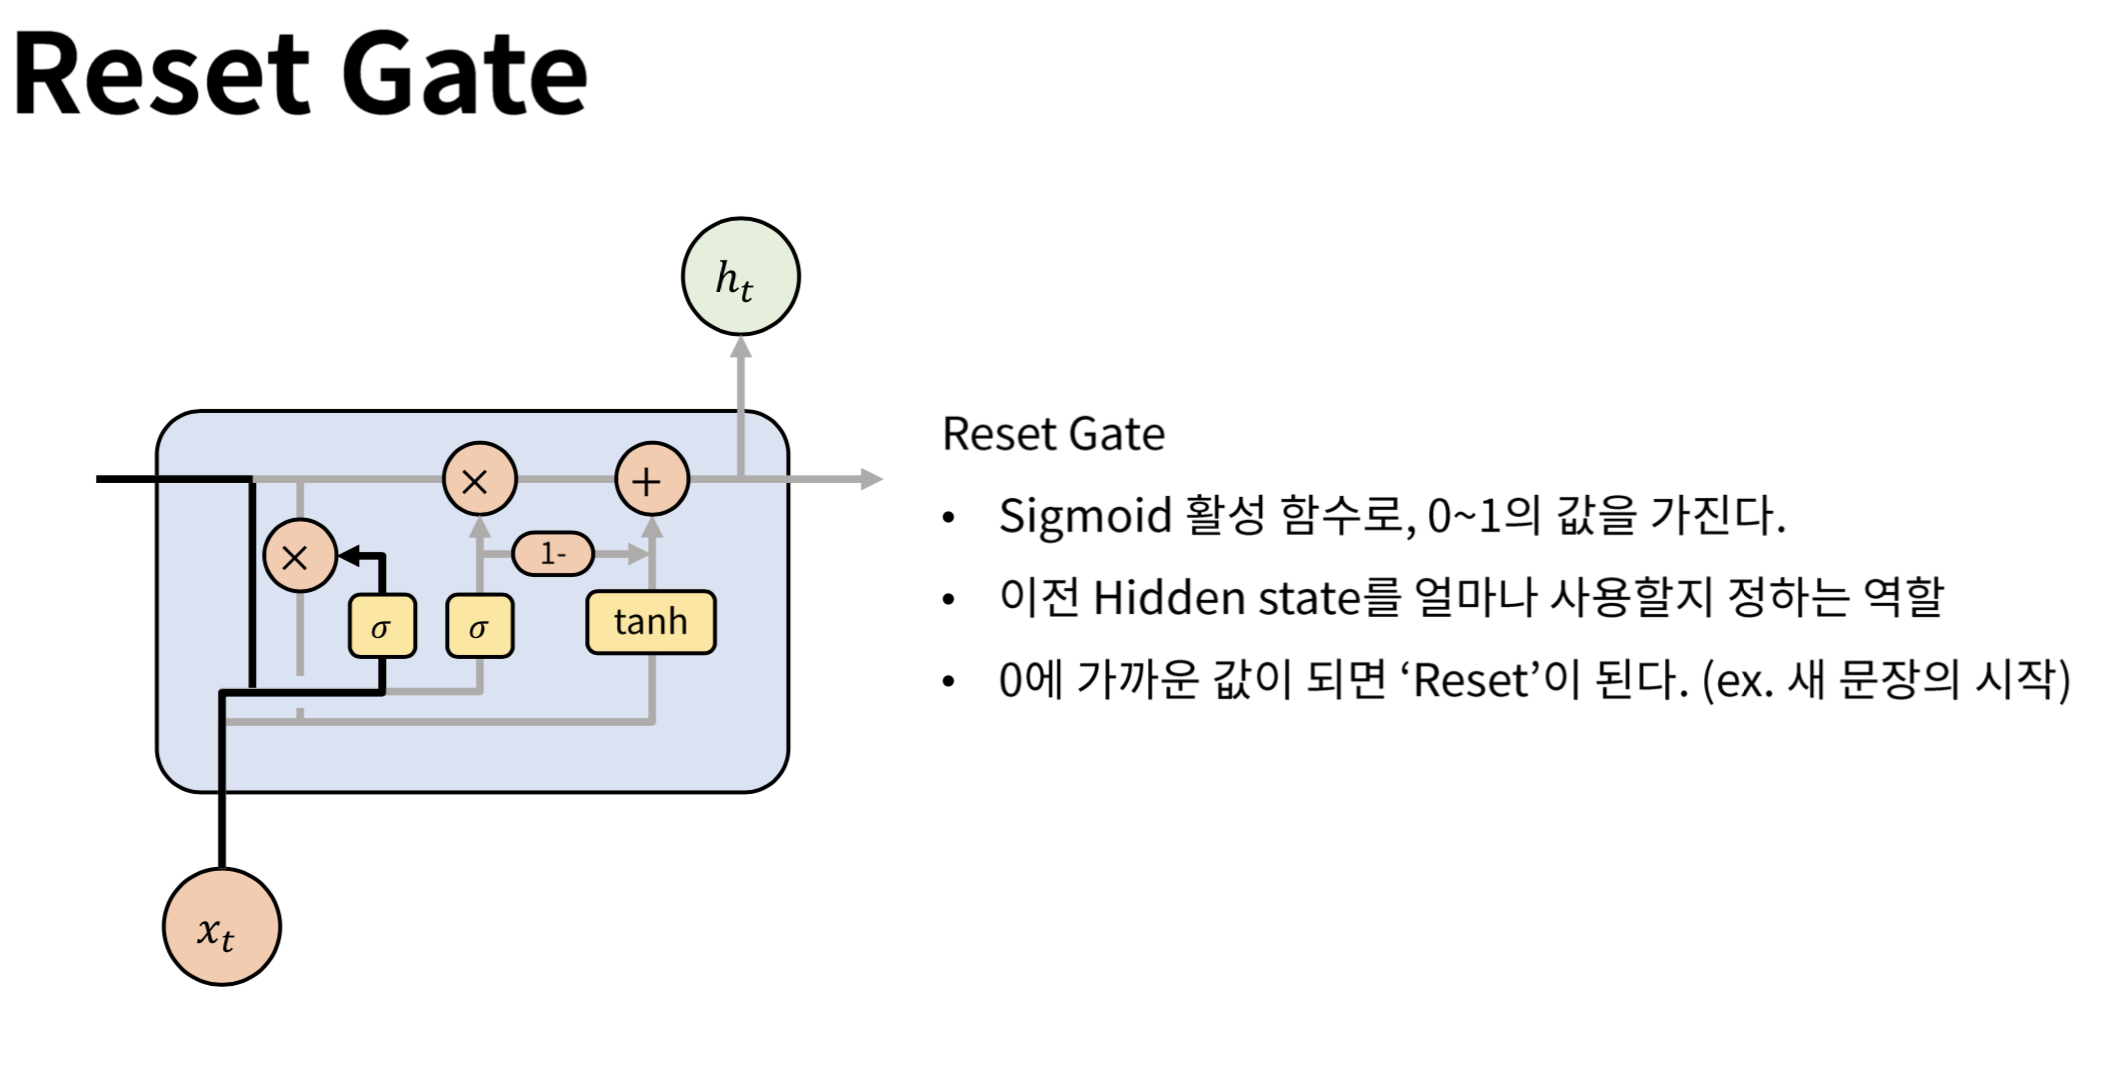 Reset Gate